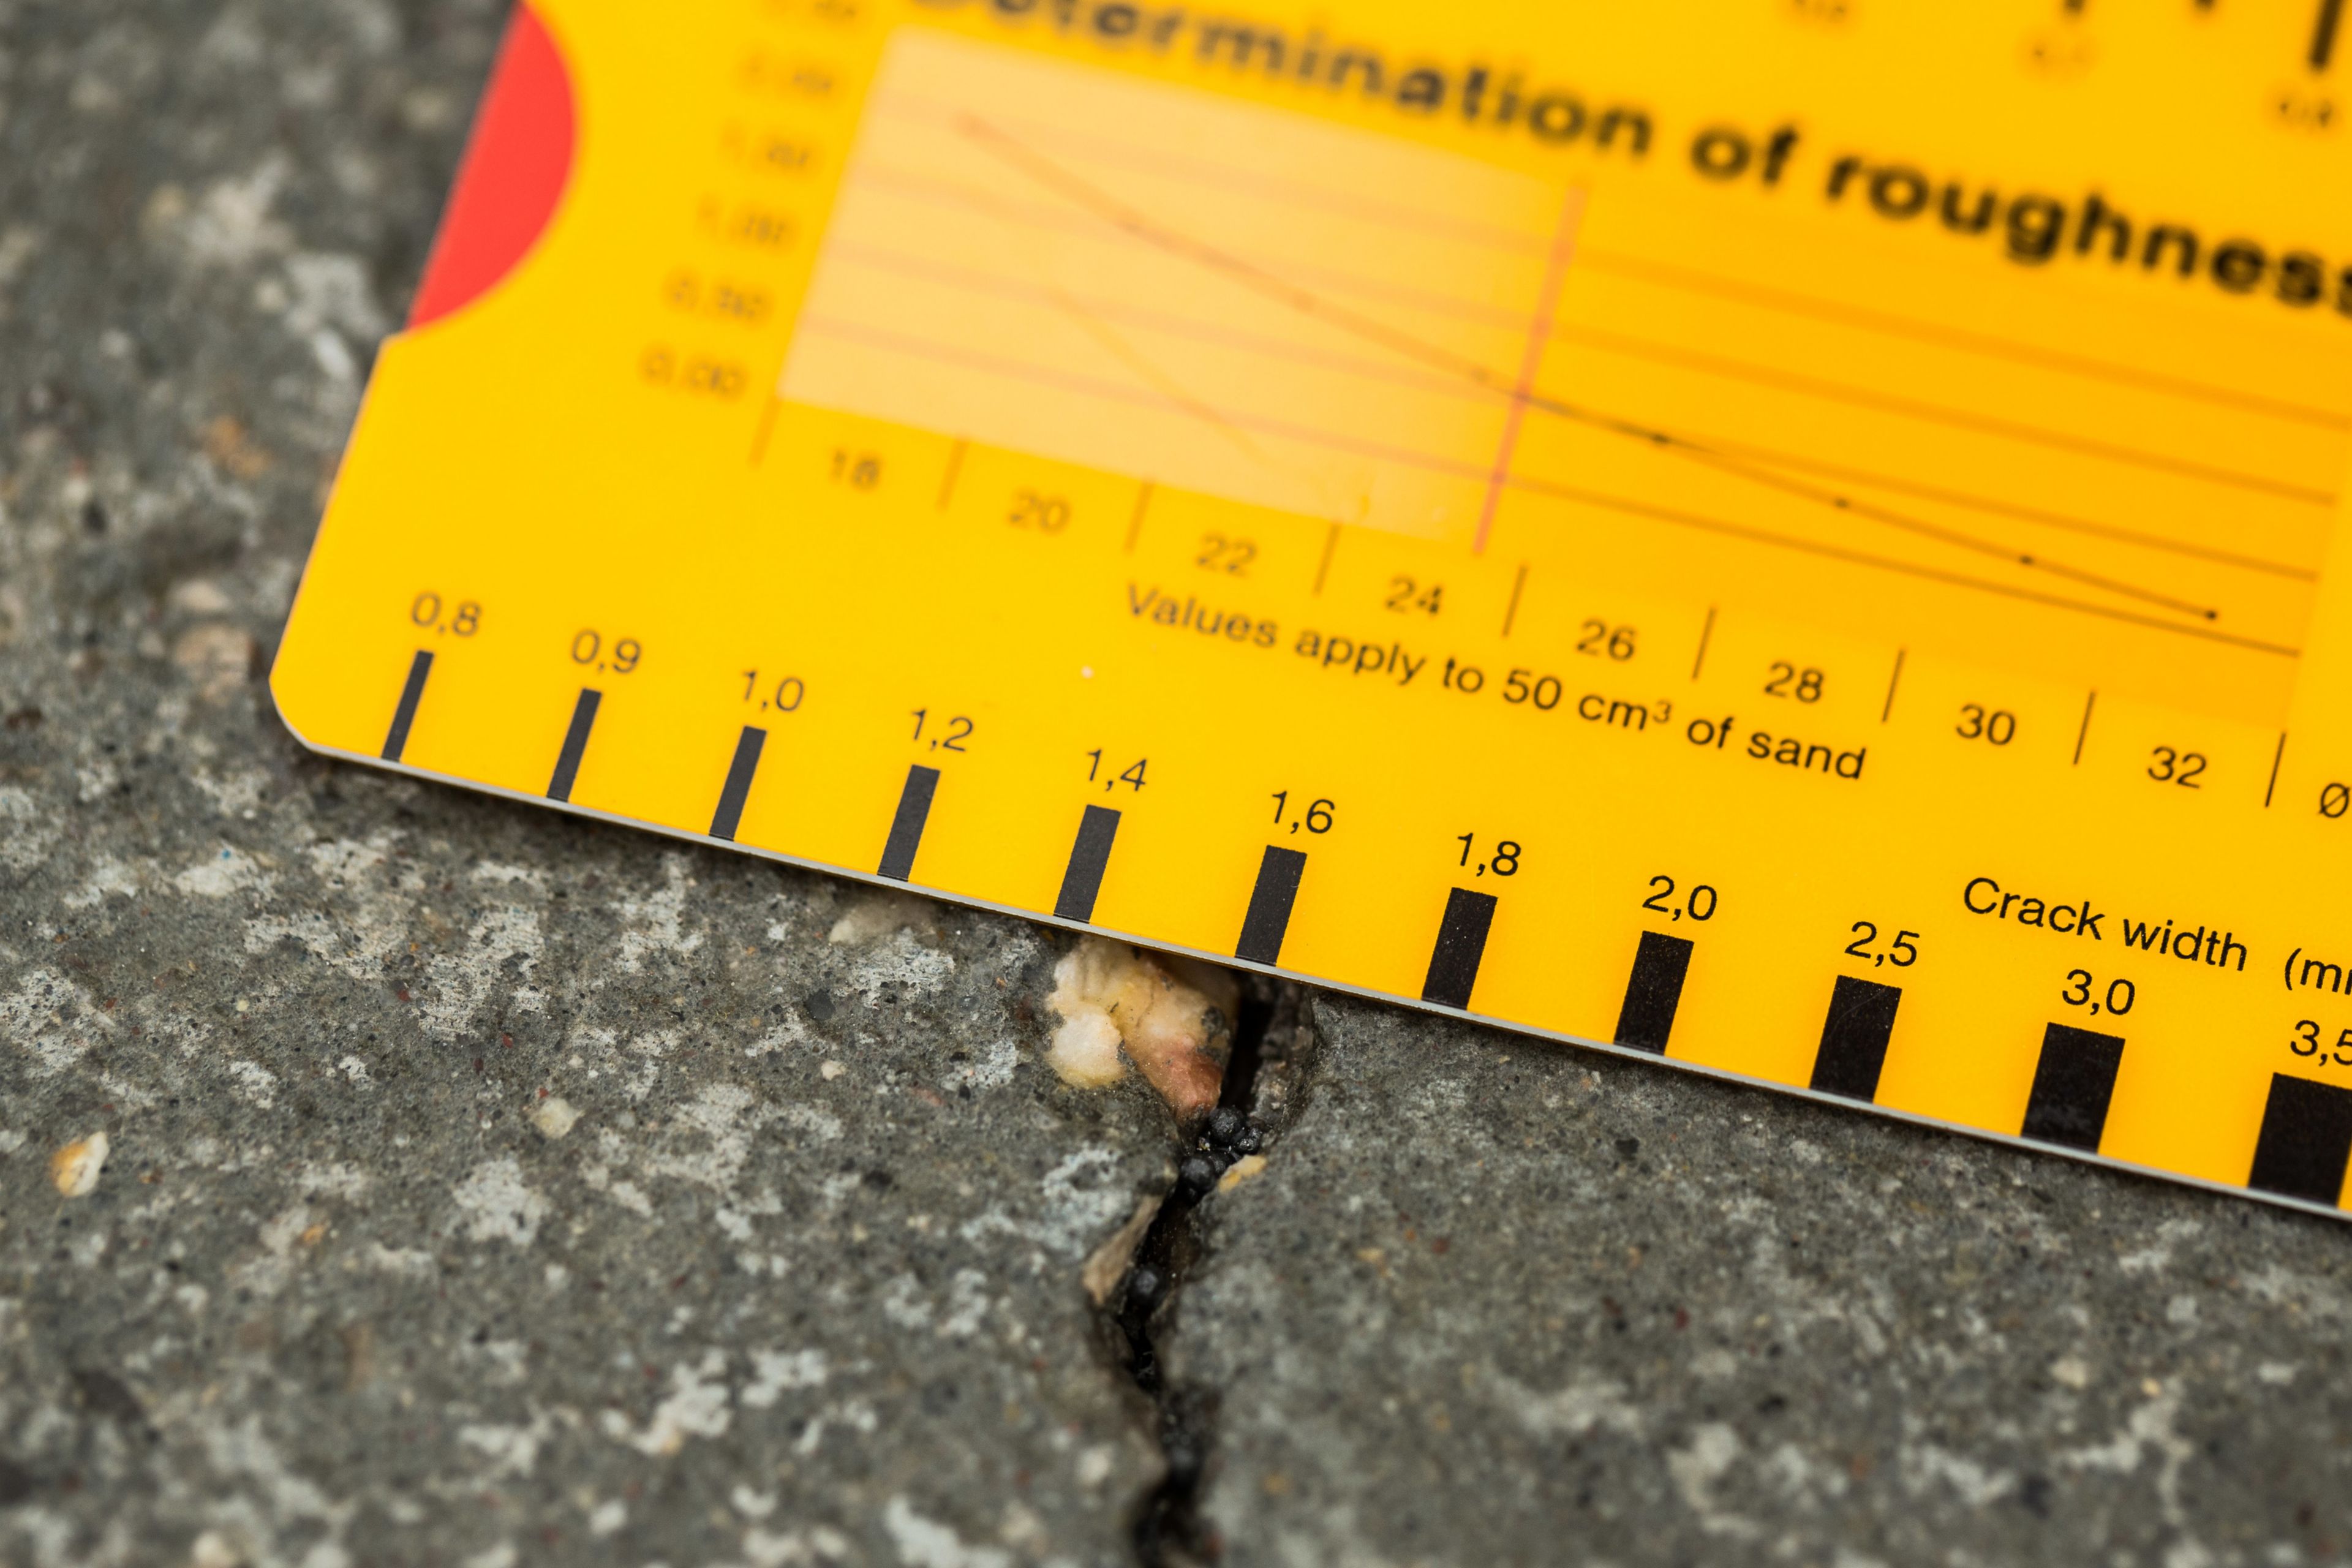 1,6 mm wide crack on the floor of a parking garage